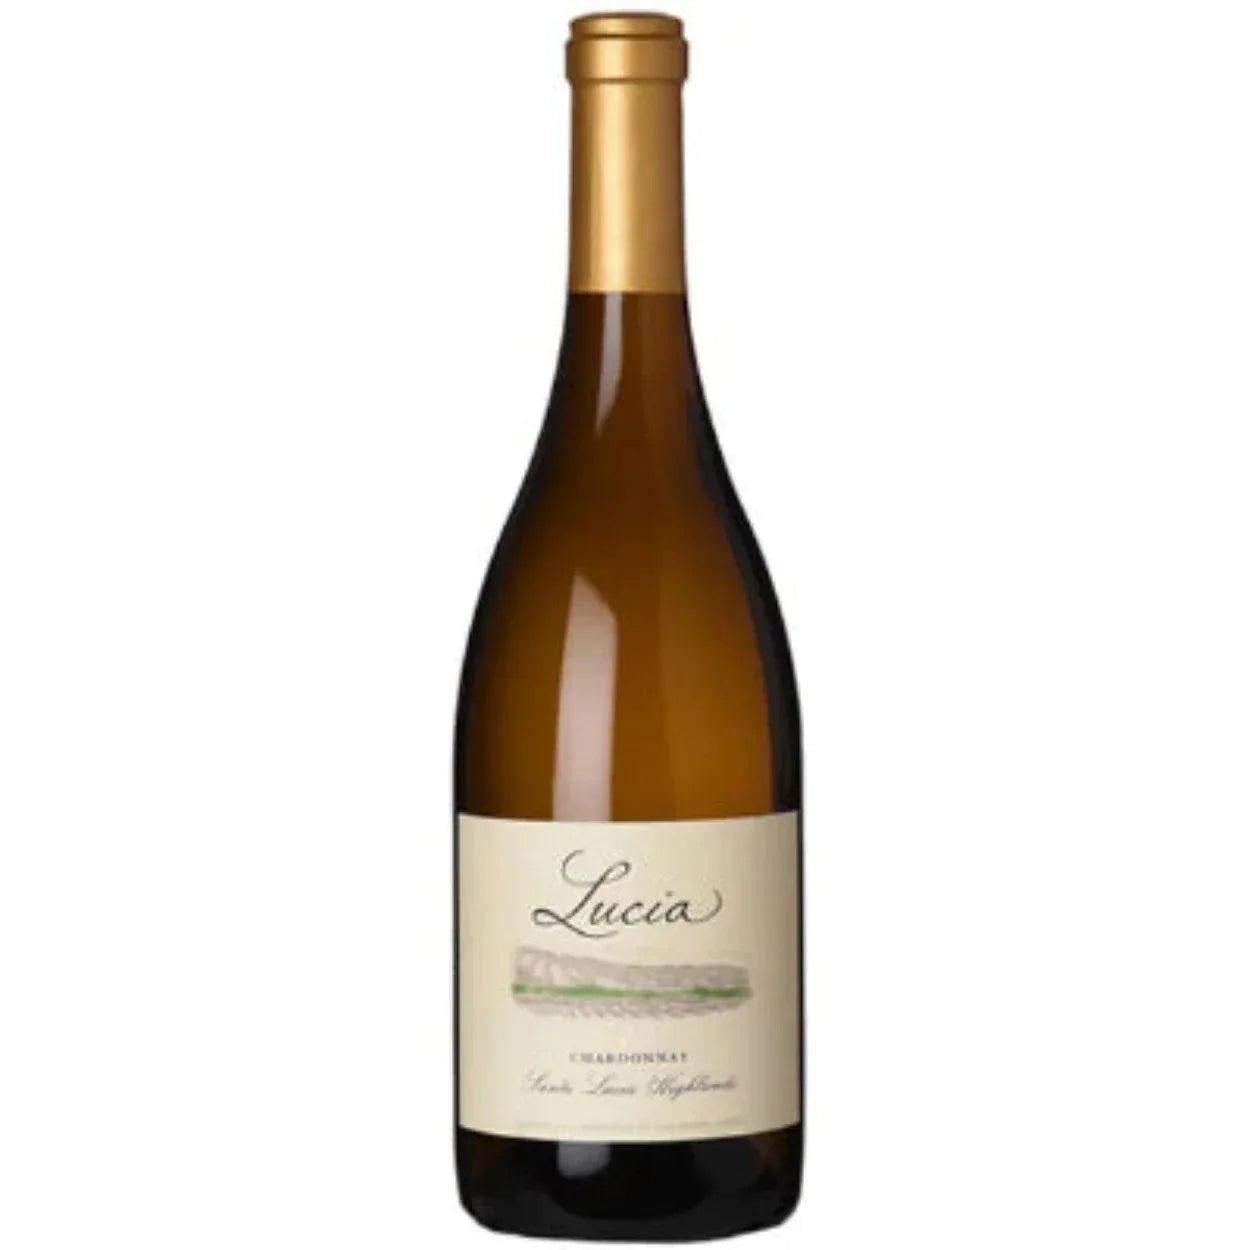 2019 Lucia Vineyards Chardonnay Santa Lucia Highlands, USA